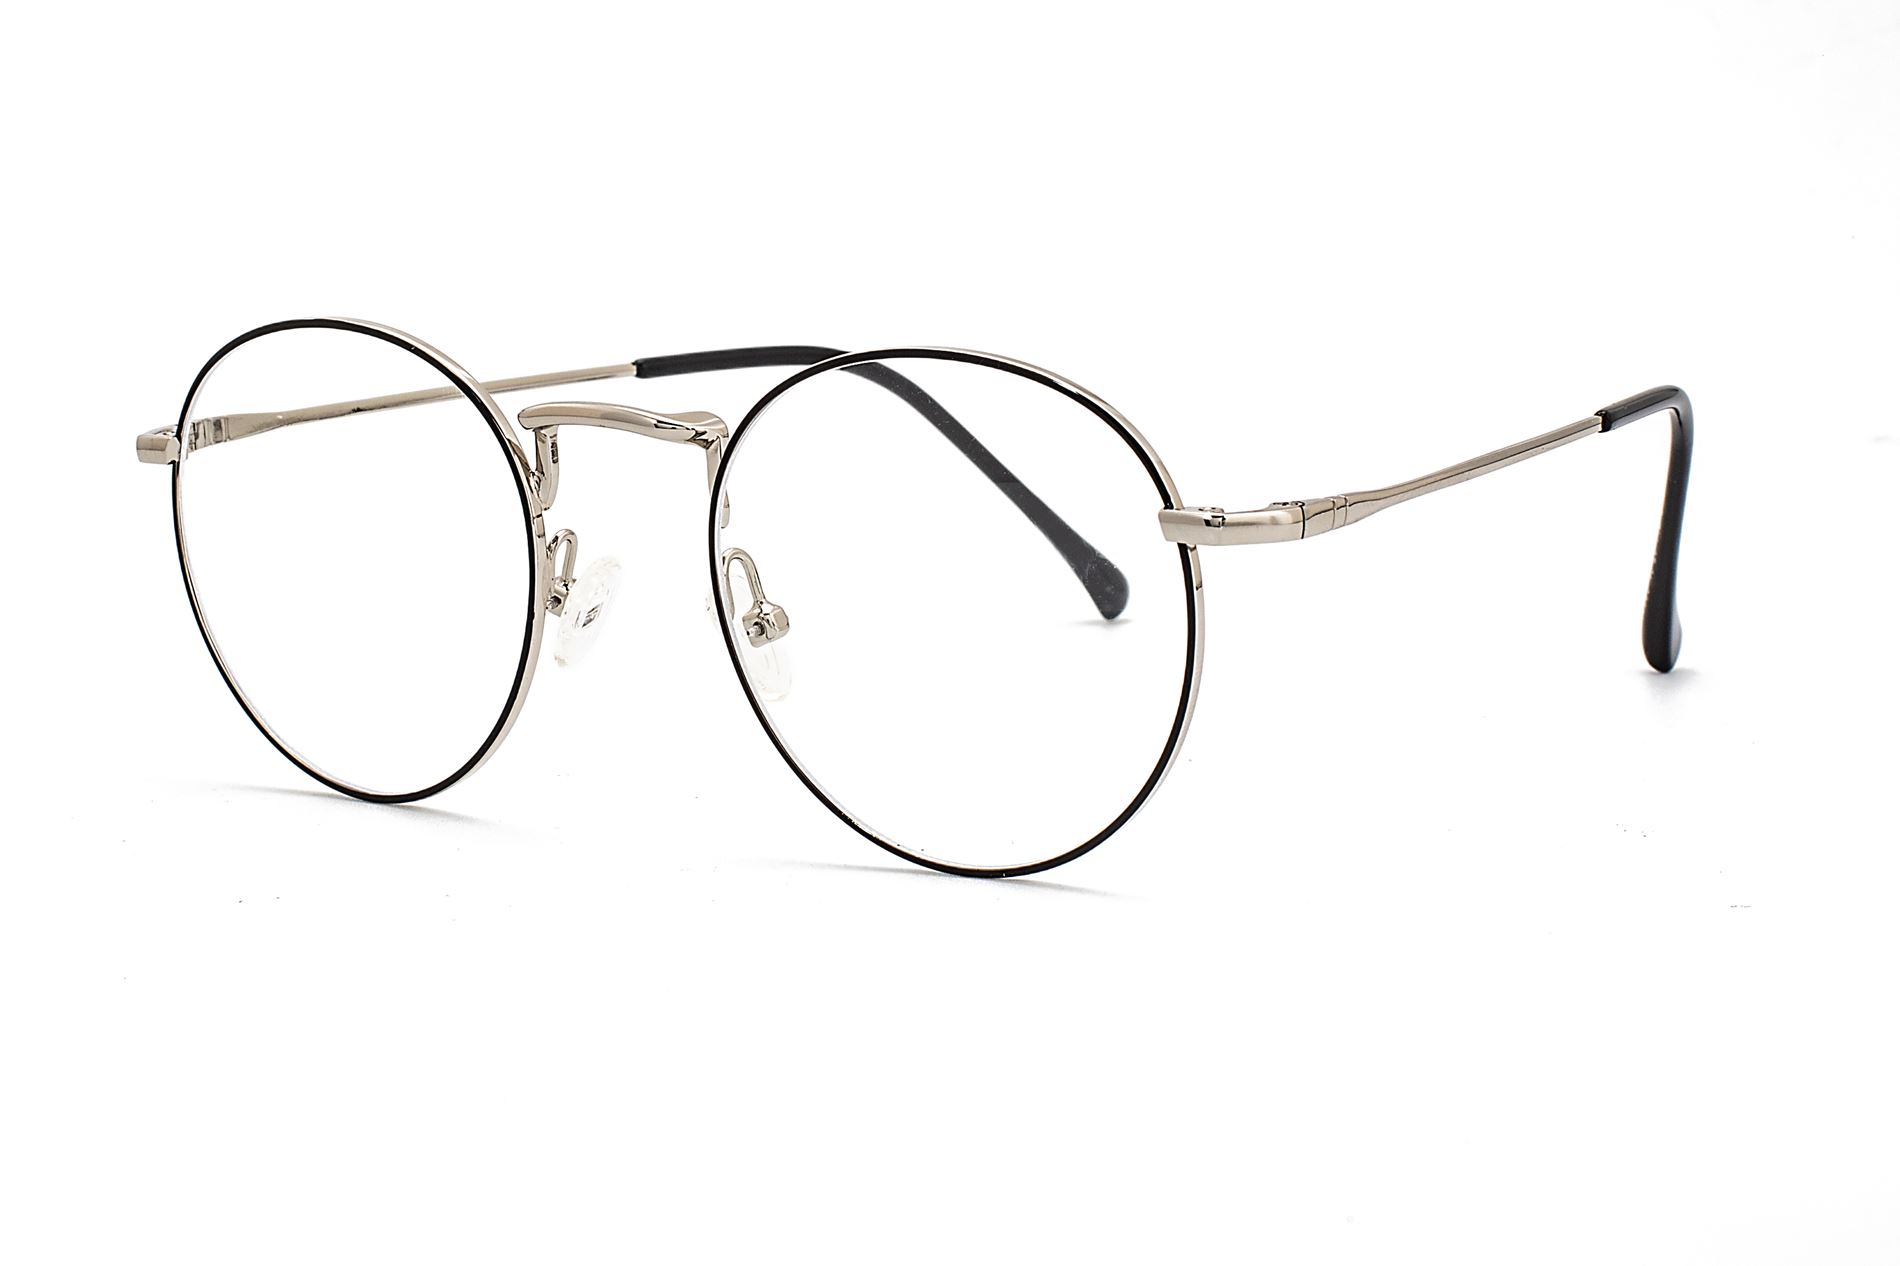 [FitGlasses網路眼鏡] 眼鏡批發便宜50%,鏡框線上試戴與推薦-FitGlasses視鏡空間- 首選線上配鏡, 兒童眼鏡, 隱形眼鏡配送,  太陽眼鏡, 兒控鏡片